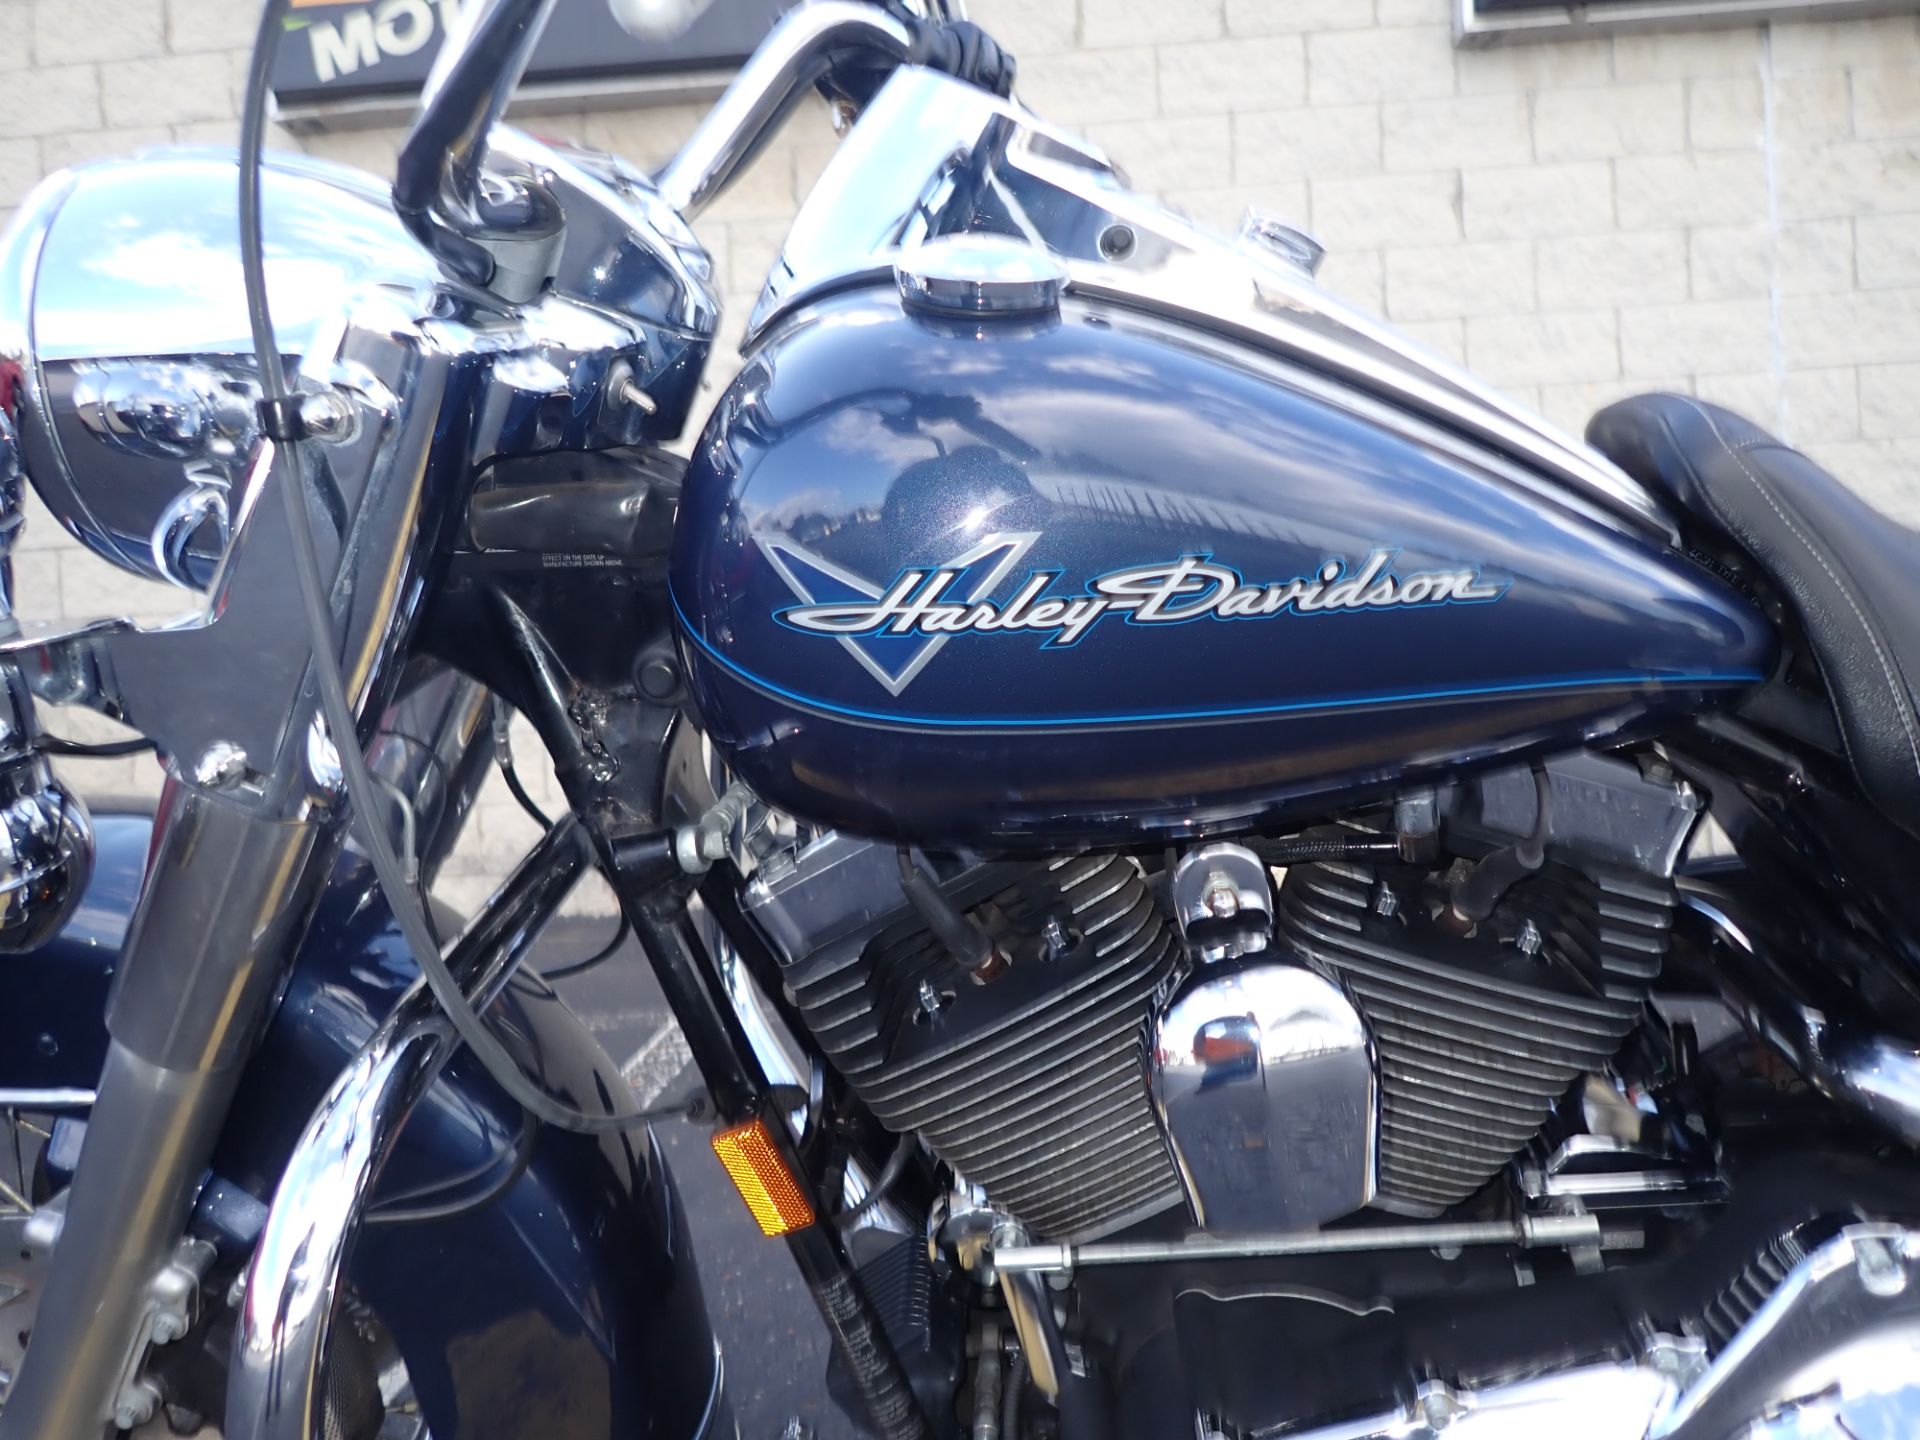 2008 Harley-Davidson Road King® in Massillon, Ohio - Photo 14